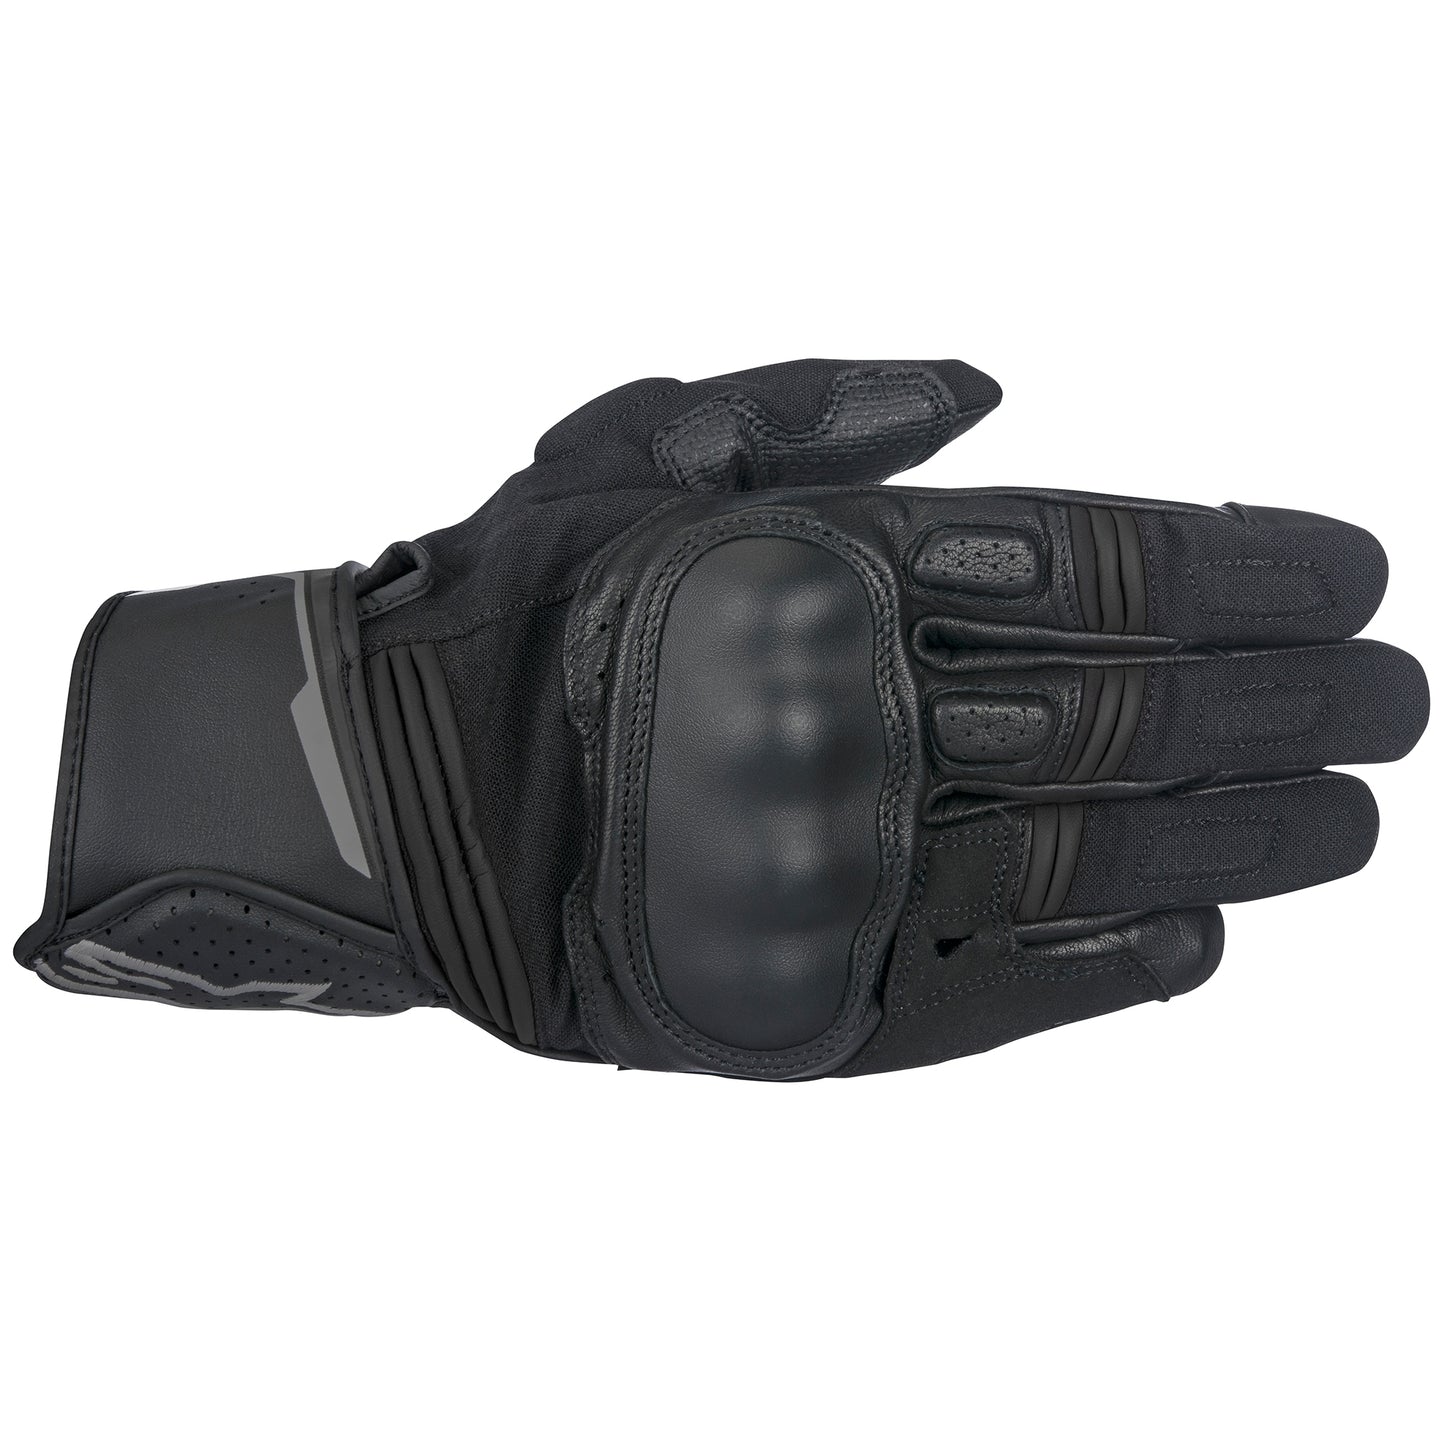 Alpinestars Booster Gloves - Black/Anthracite